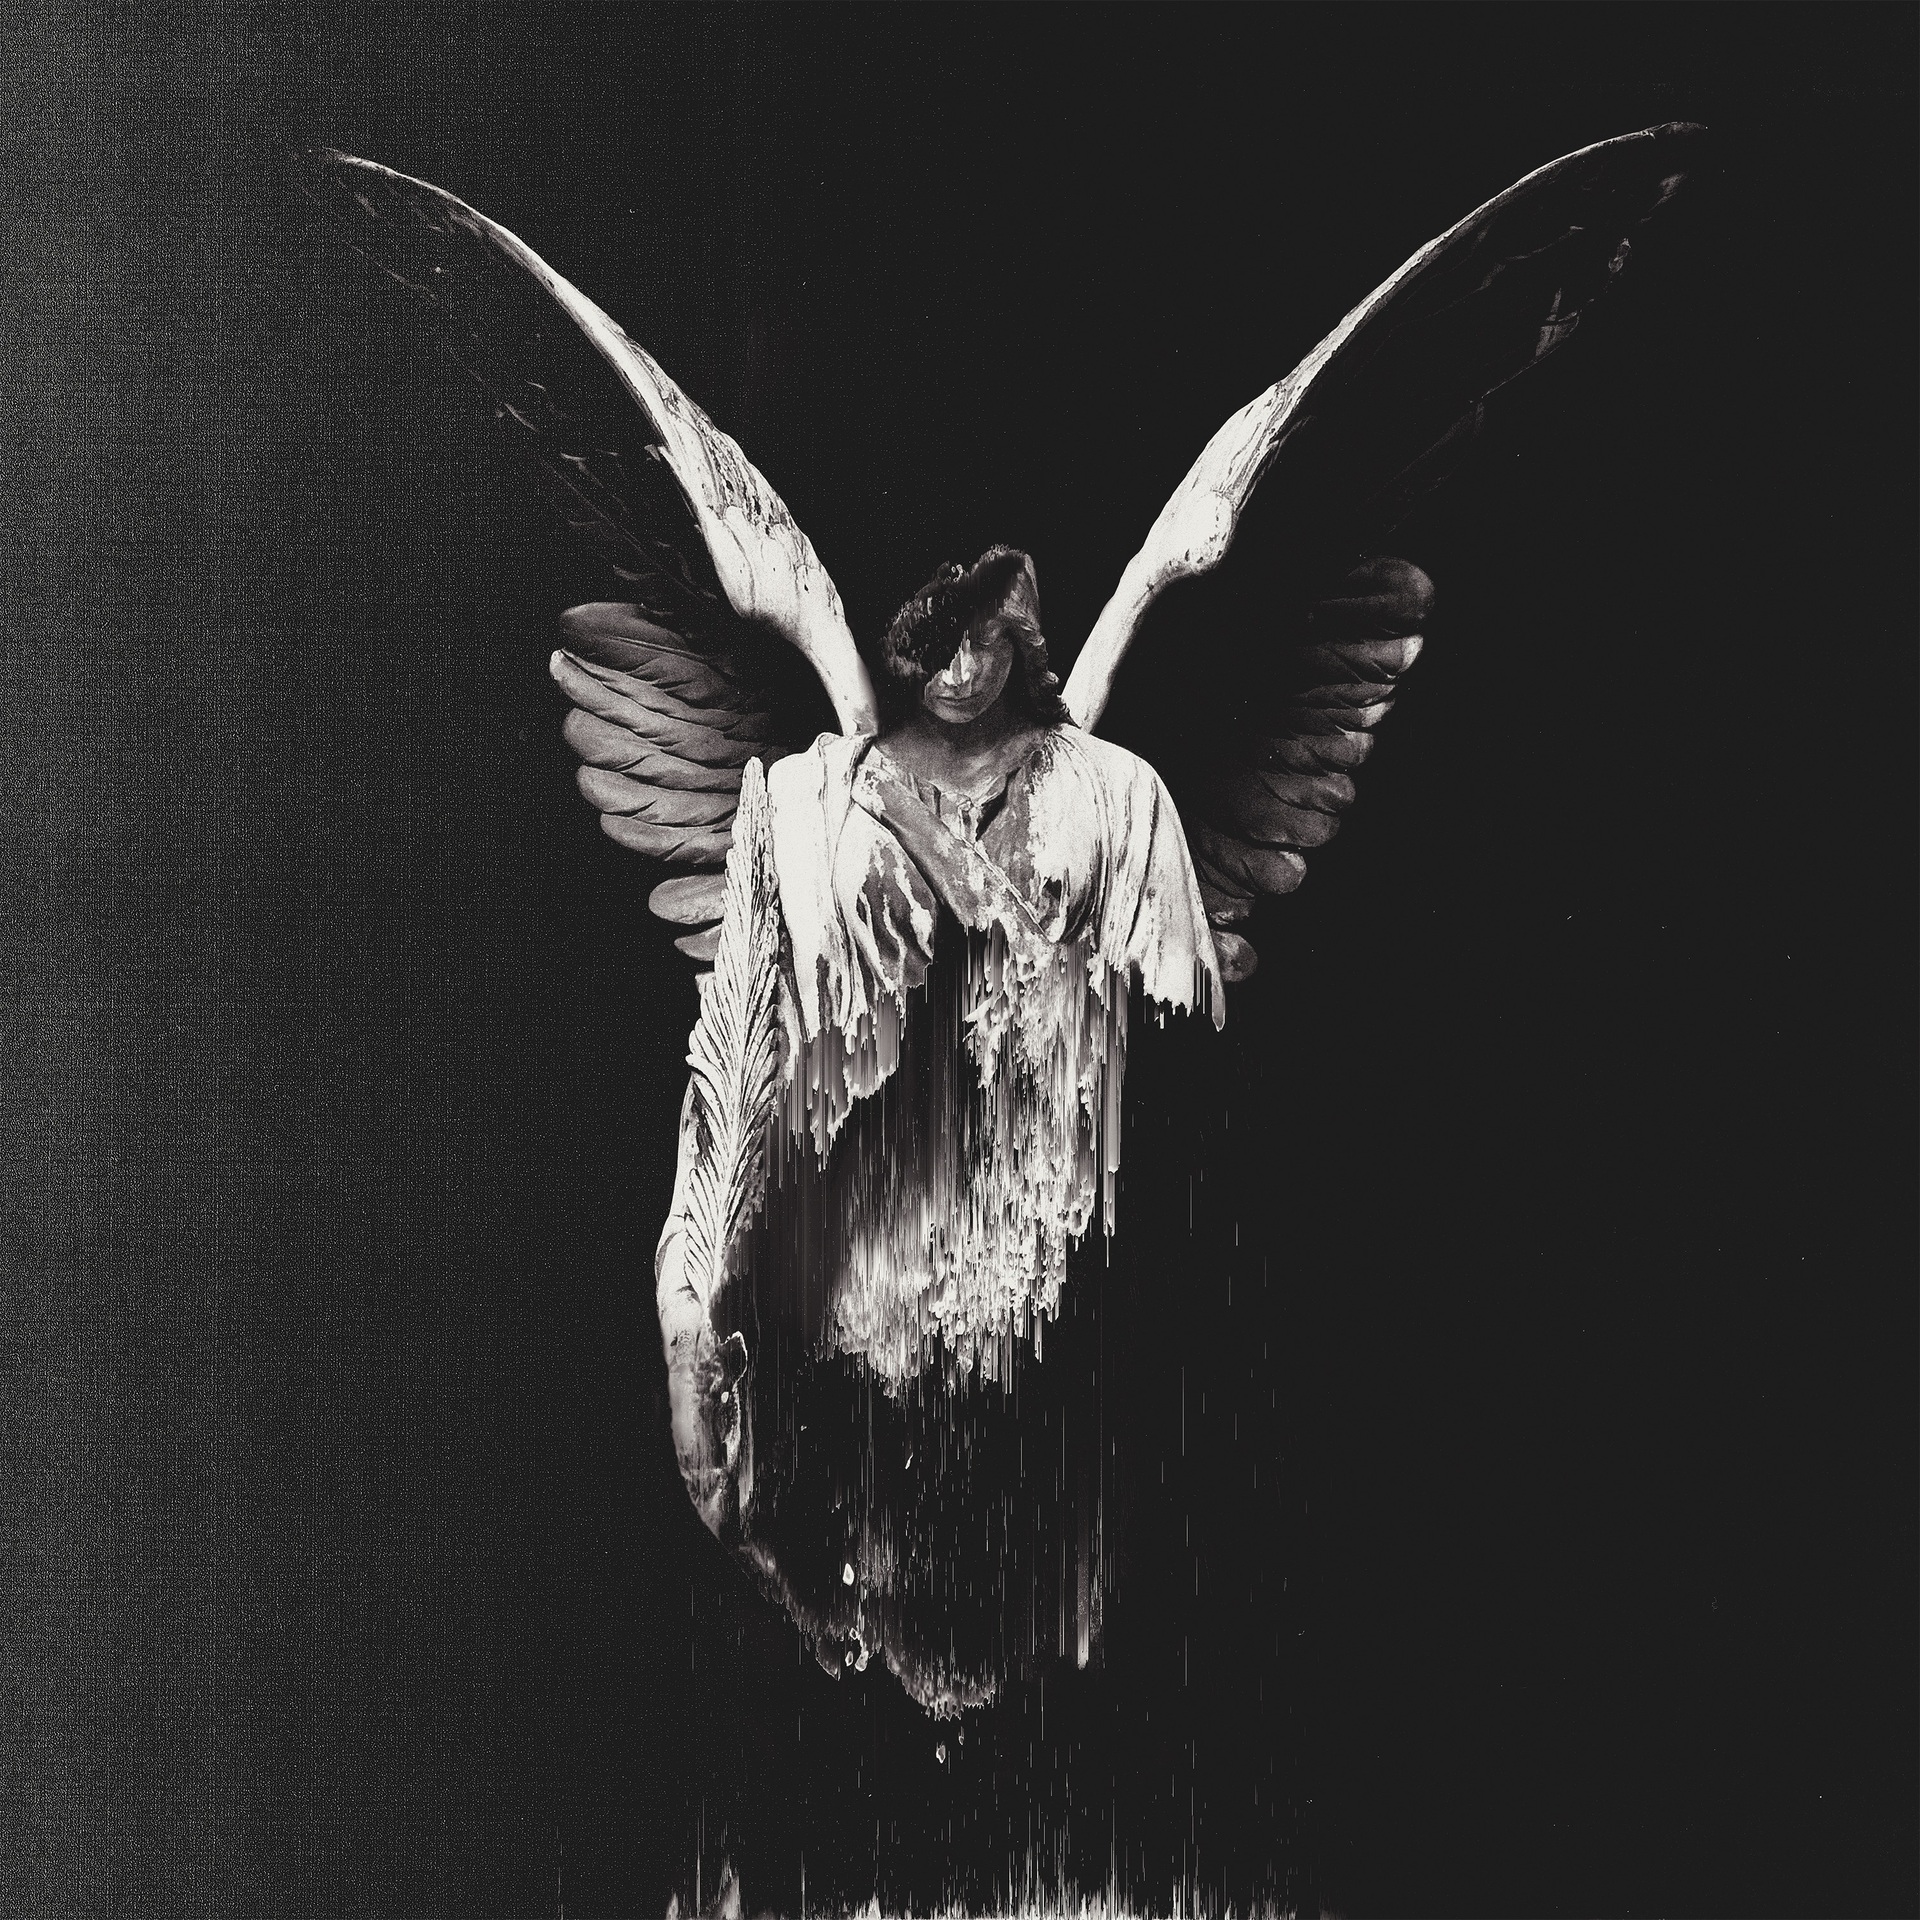 Underøath's Erase Me Debuts at #4 on Billboard's Top Album Sales Chart